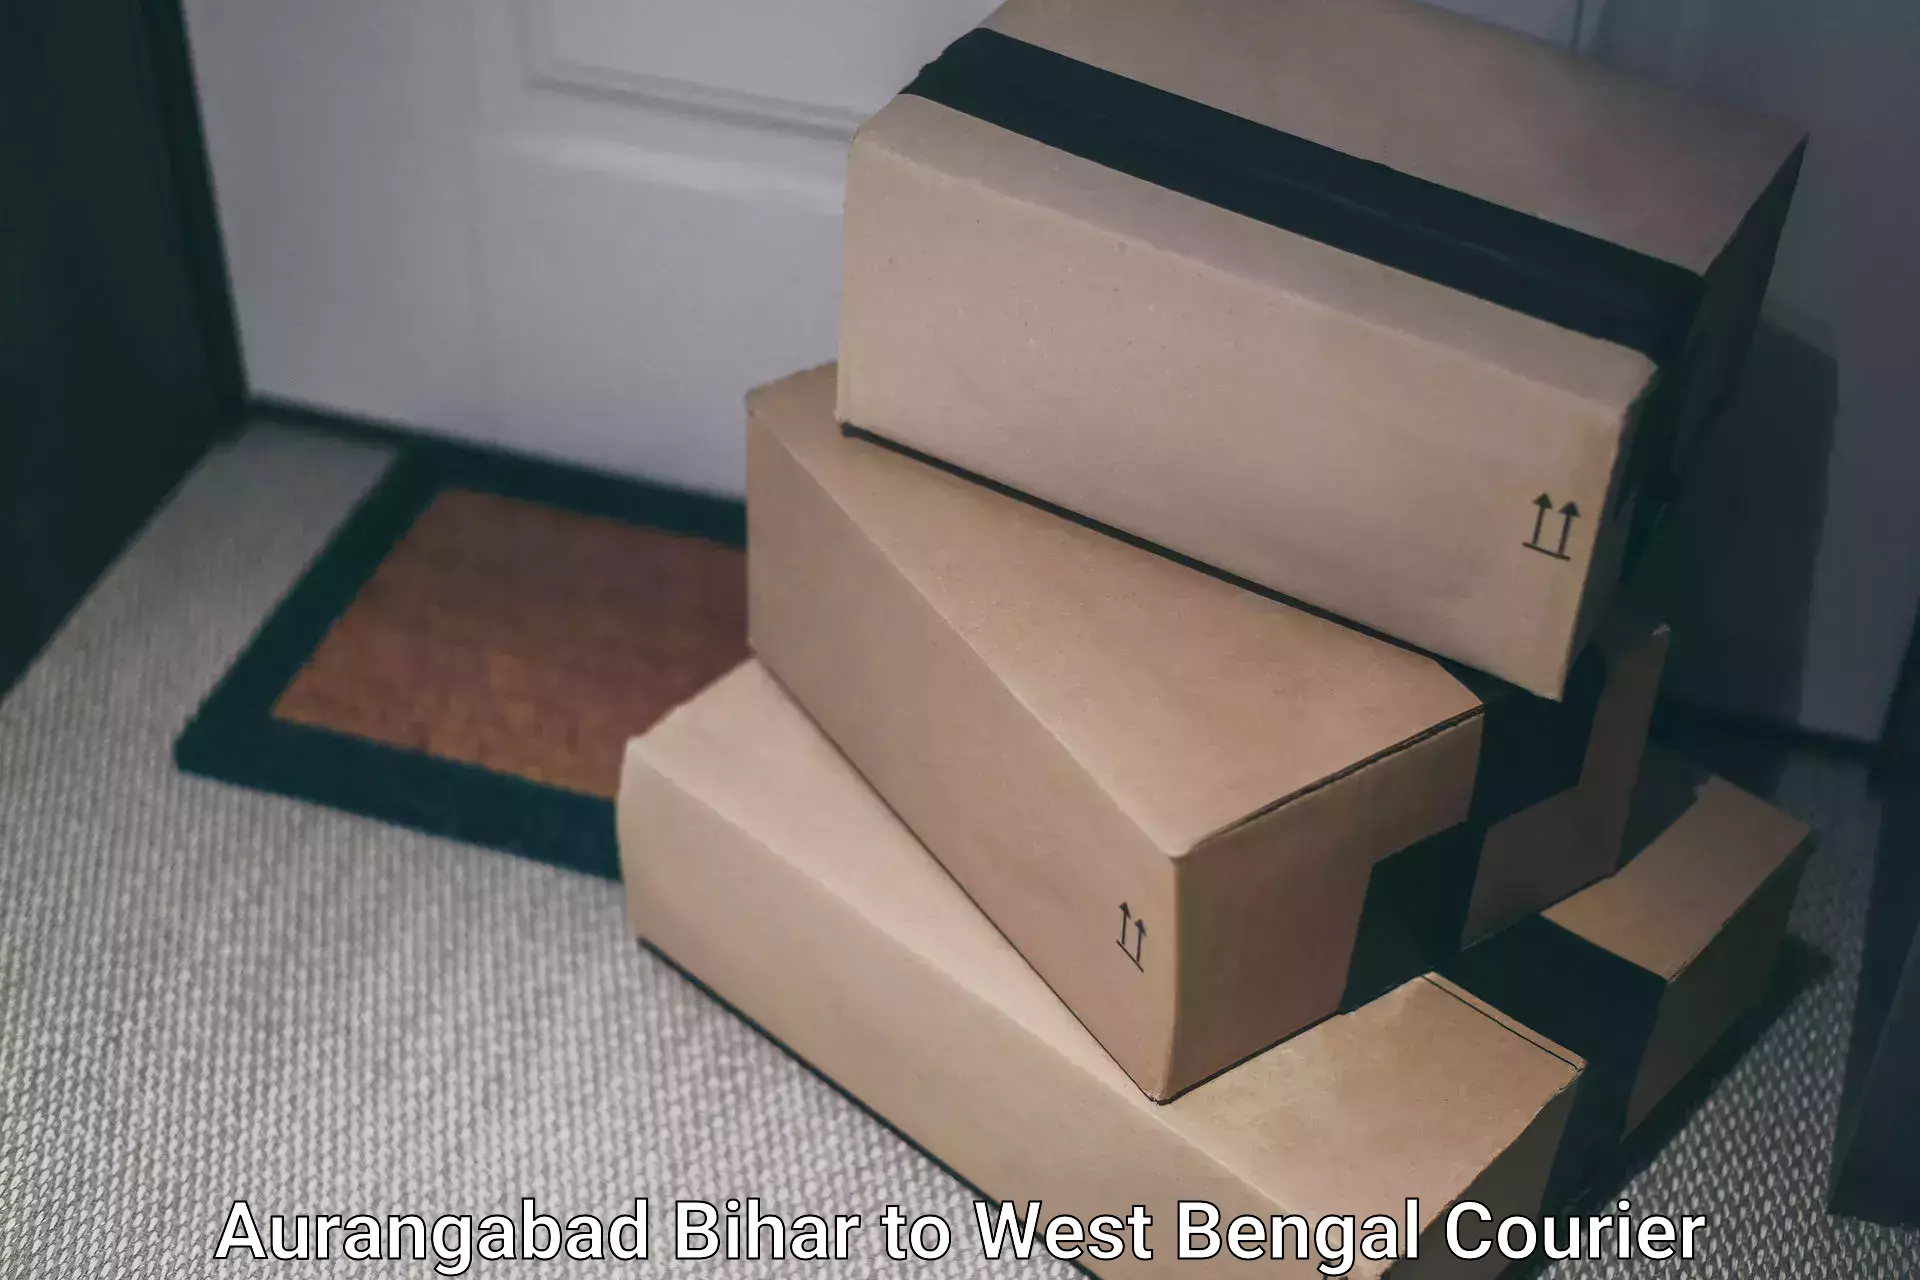 Express logistics providers Aurangabad Bihar to Kolkata